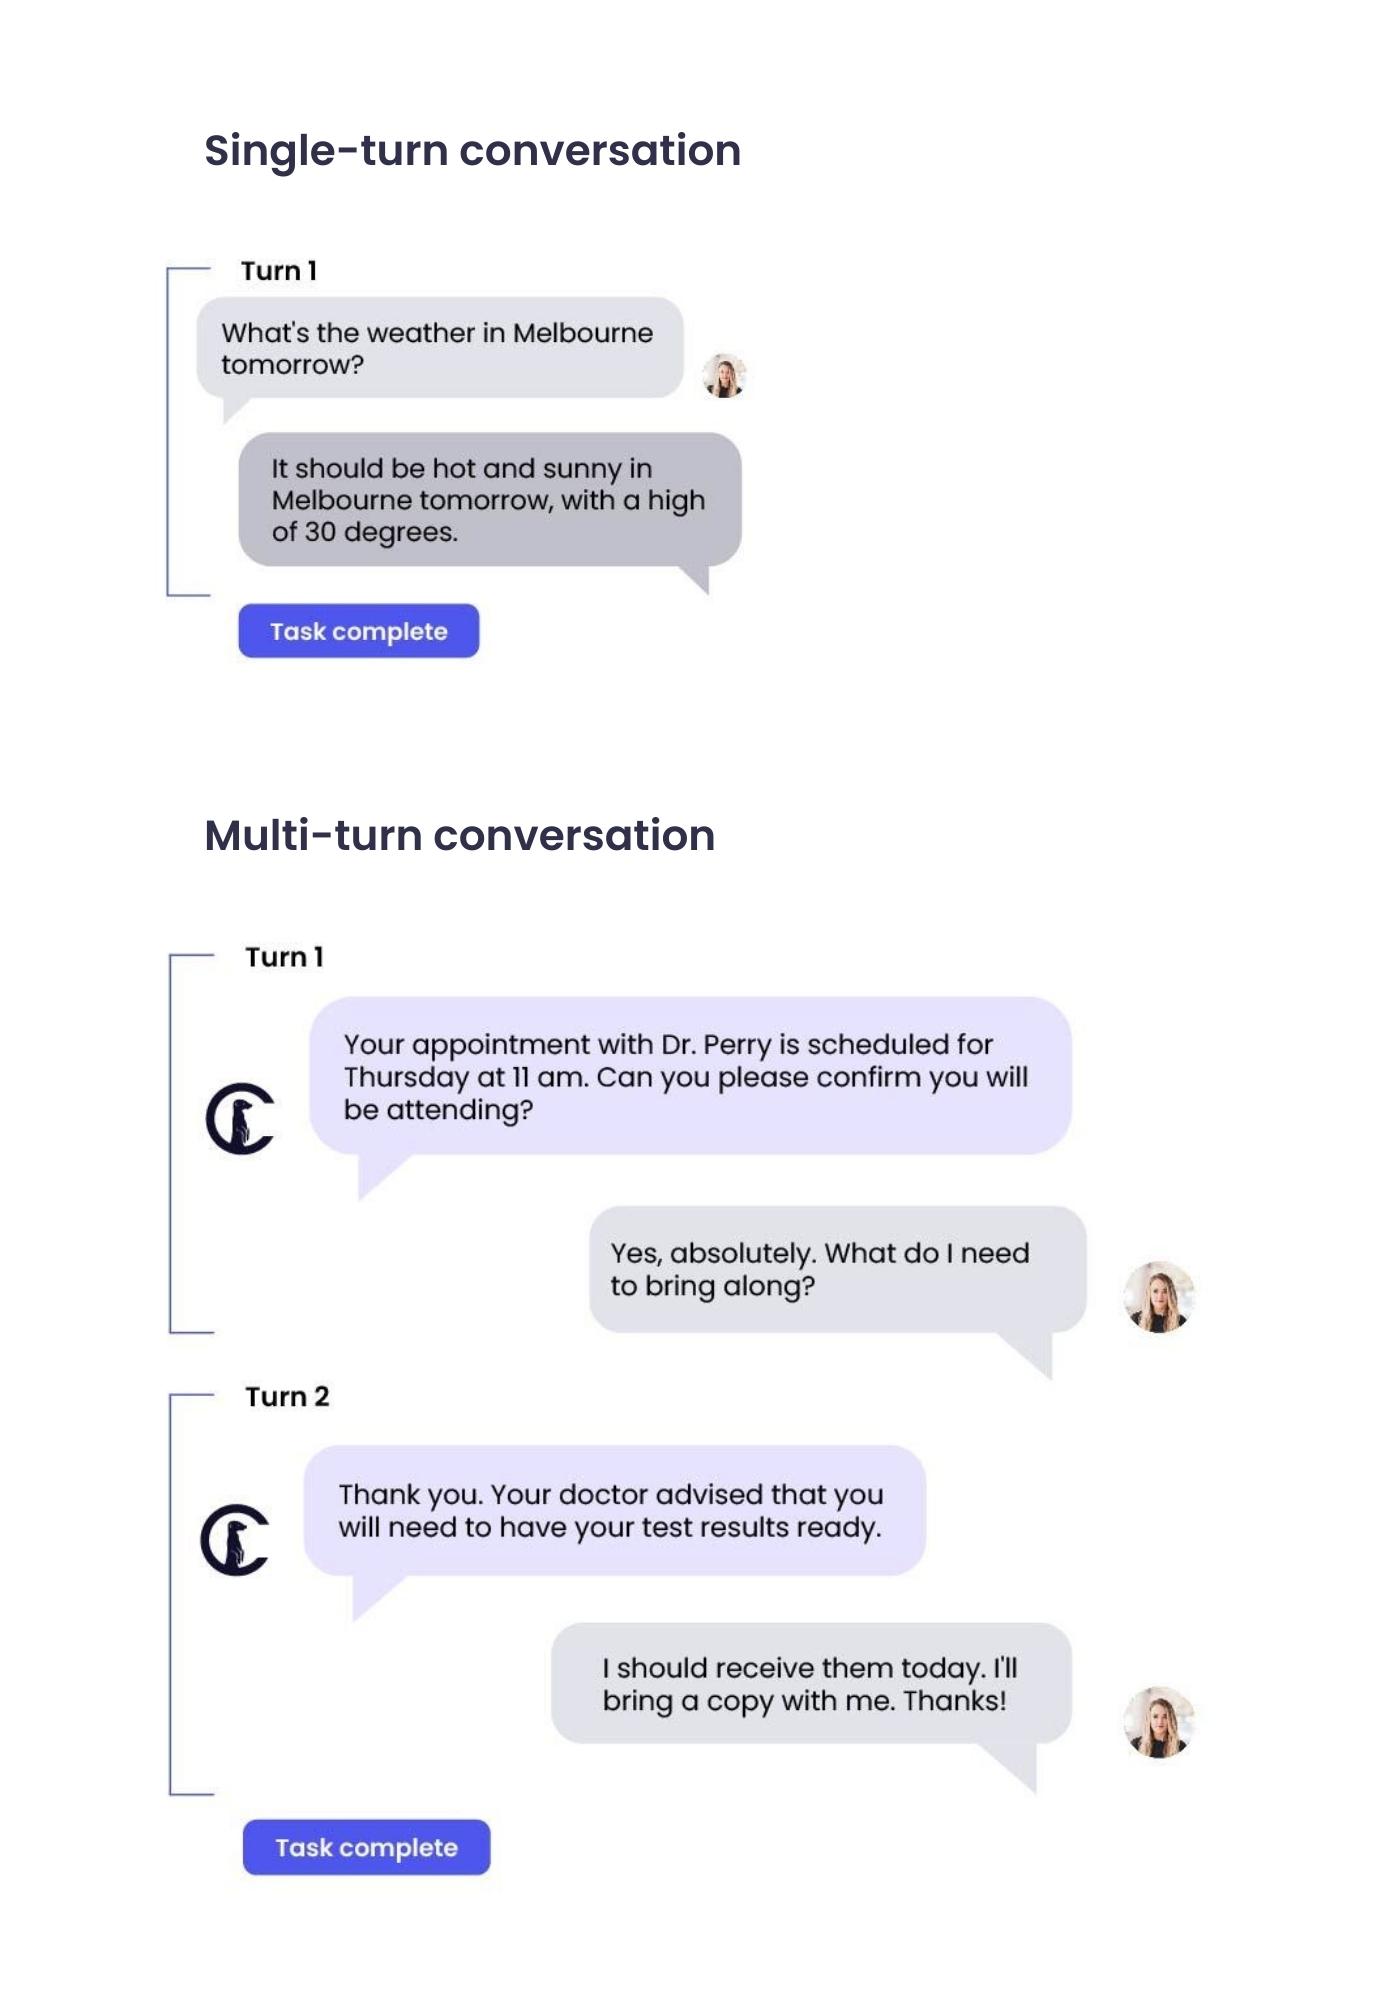 Single-turn conversation